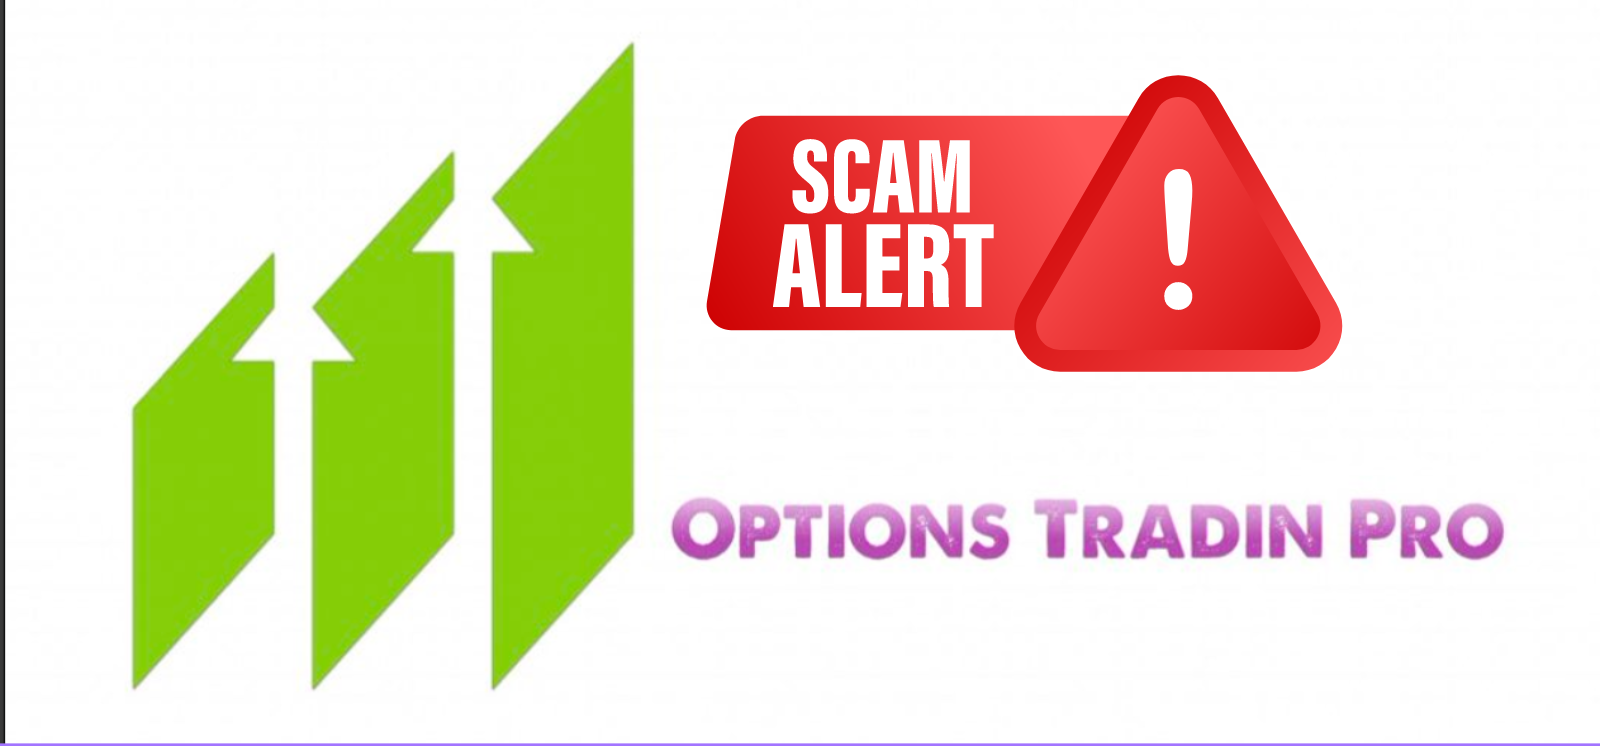 ke Options Trading Pro A Scam